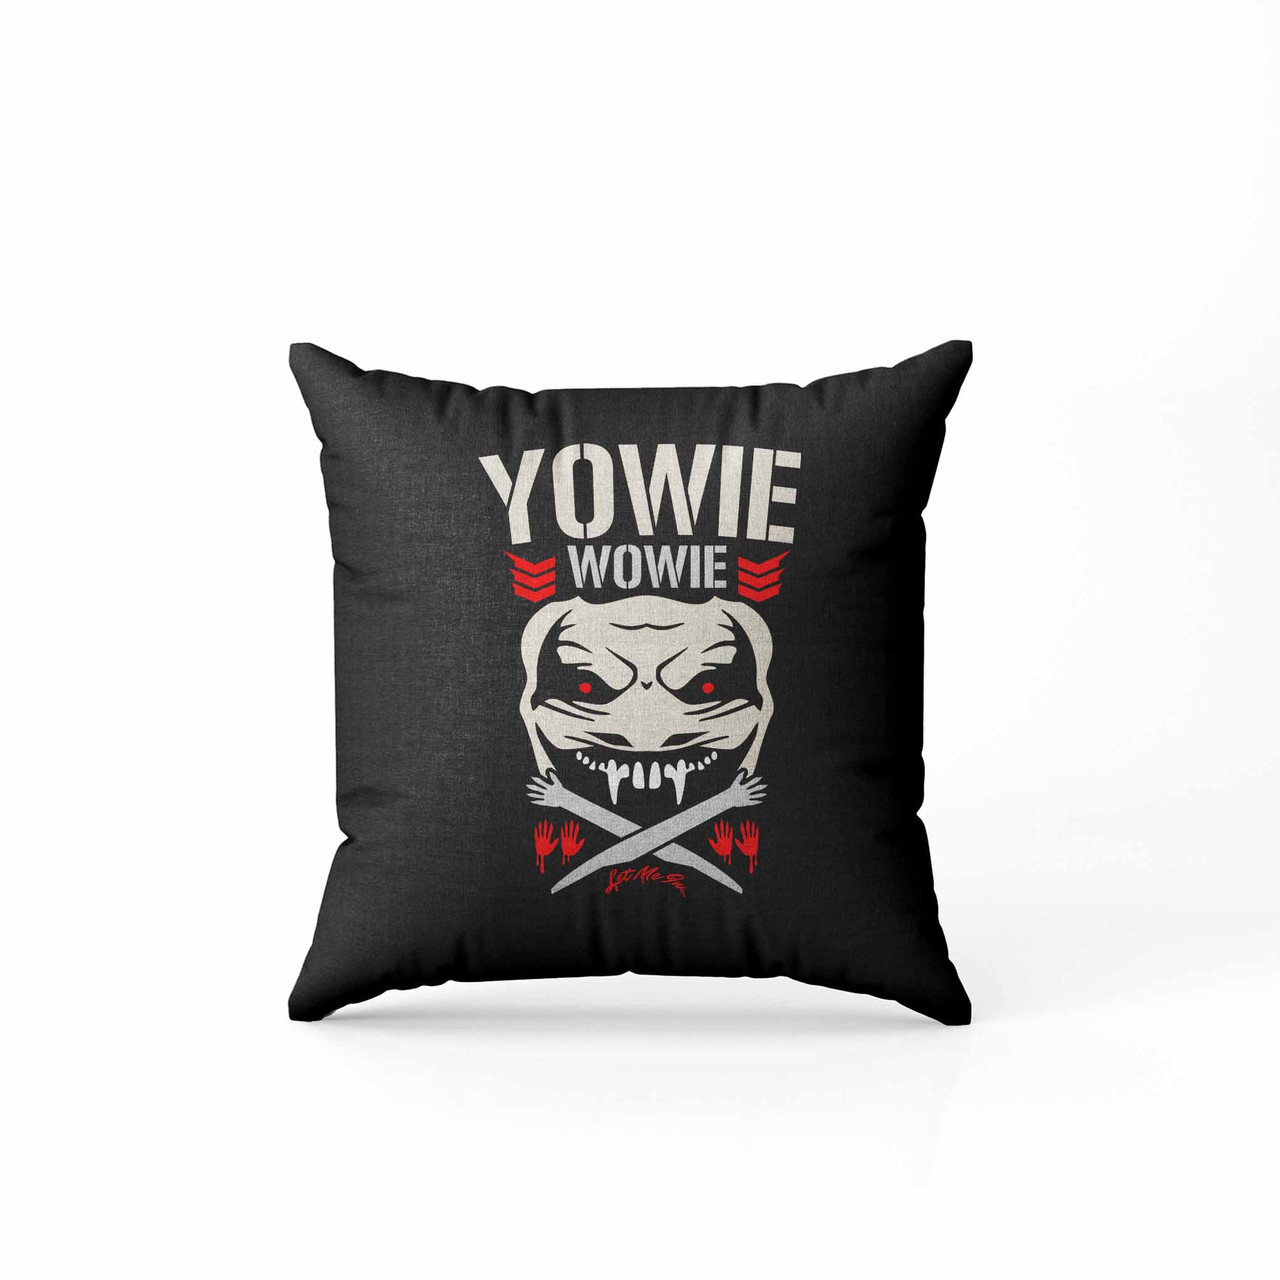 Yowie Wowie Bullet Club Logo Pillow Case Cover